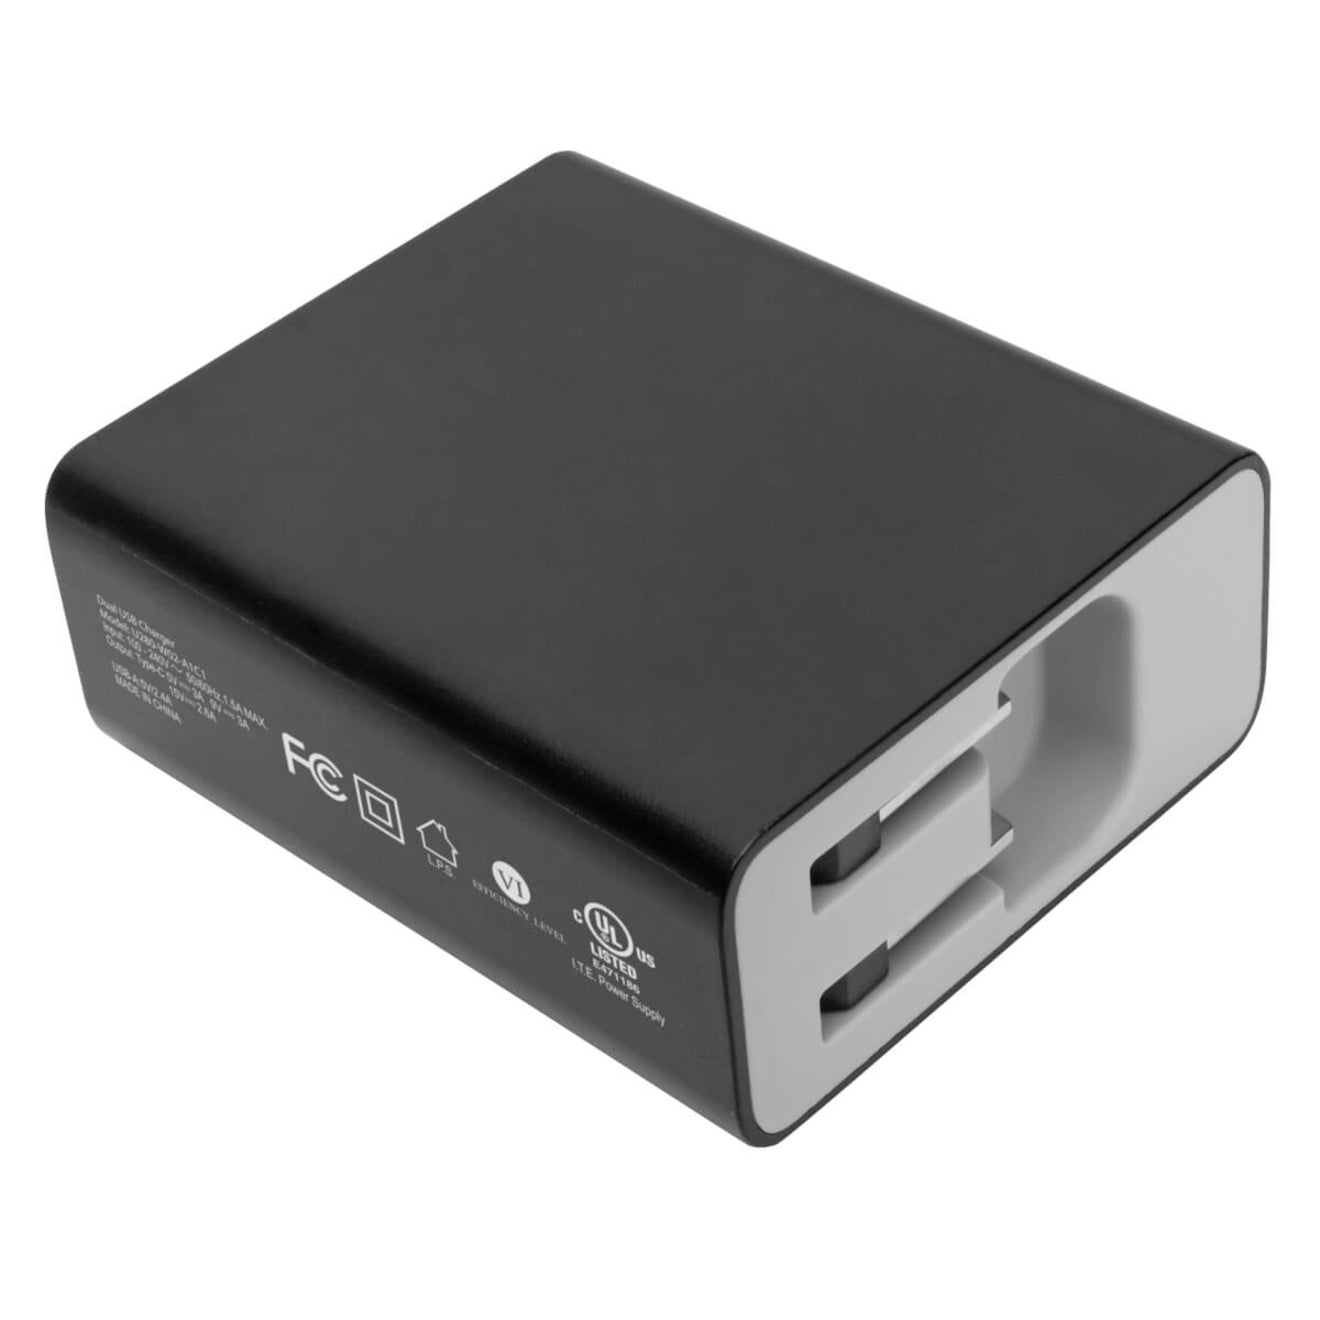 تريب لايت U280-W02-A1C1 محول تيار متردد ، شاحن حائط USB بـ 2 منفذ USB من نوع C ، 51 وات ، ضمان لمدة 2 سنة Tripp Lite